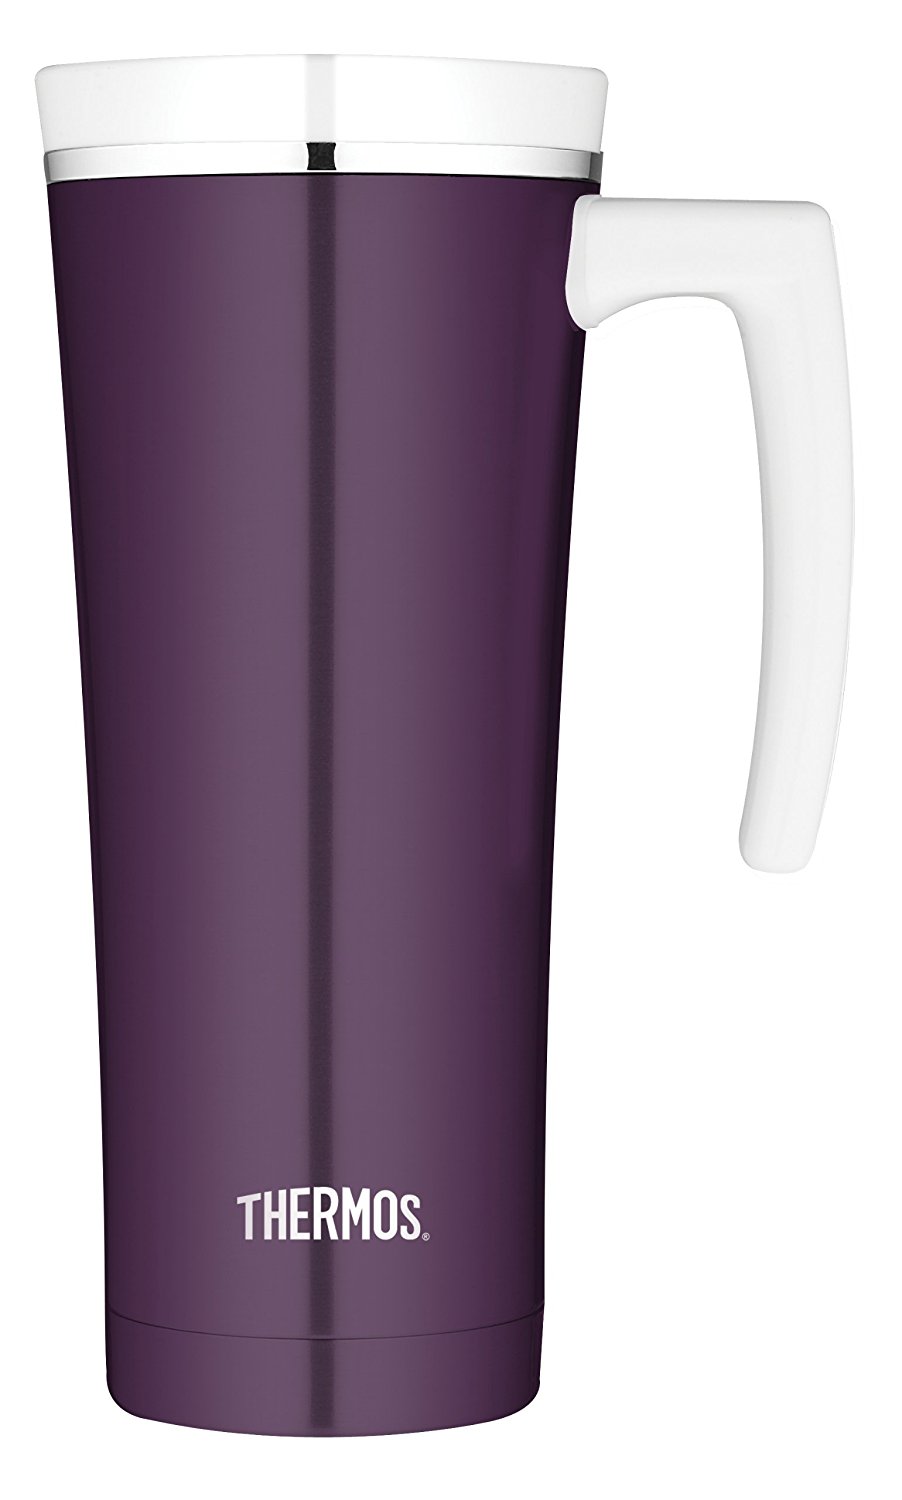 Thermos Vacuum Insulated Travel Mug